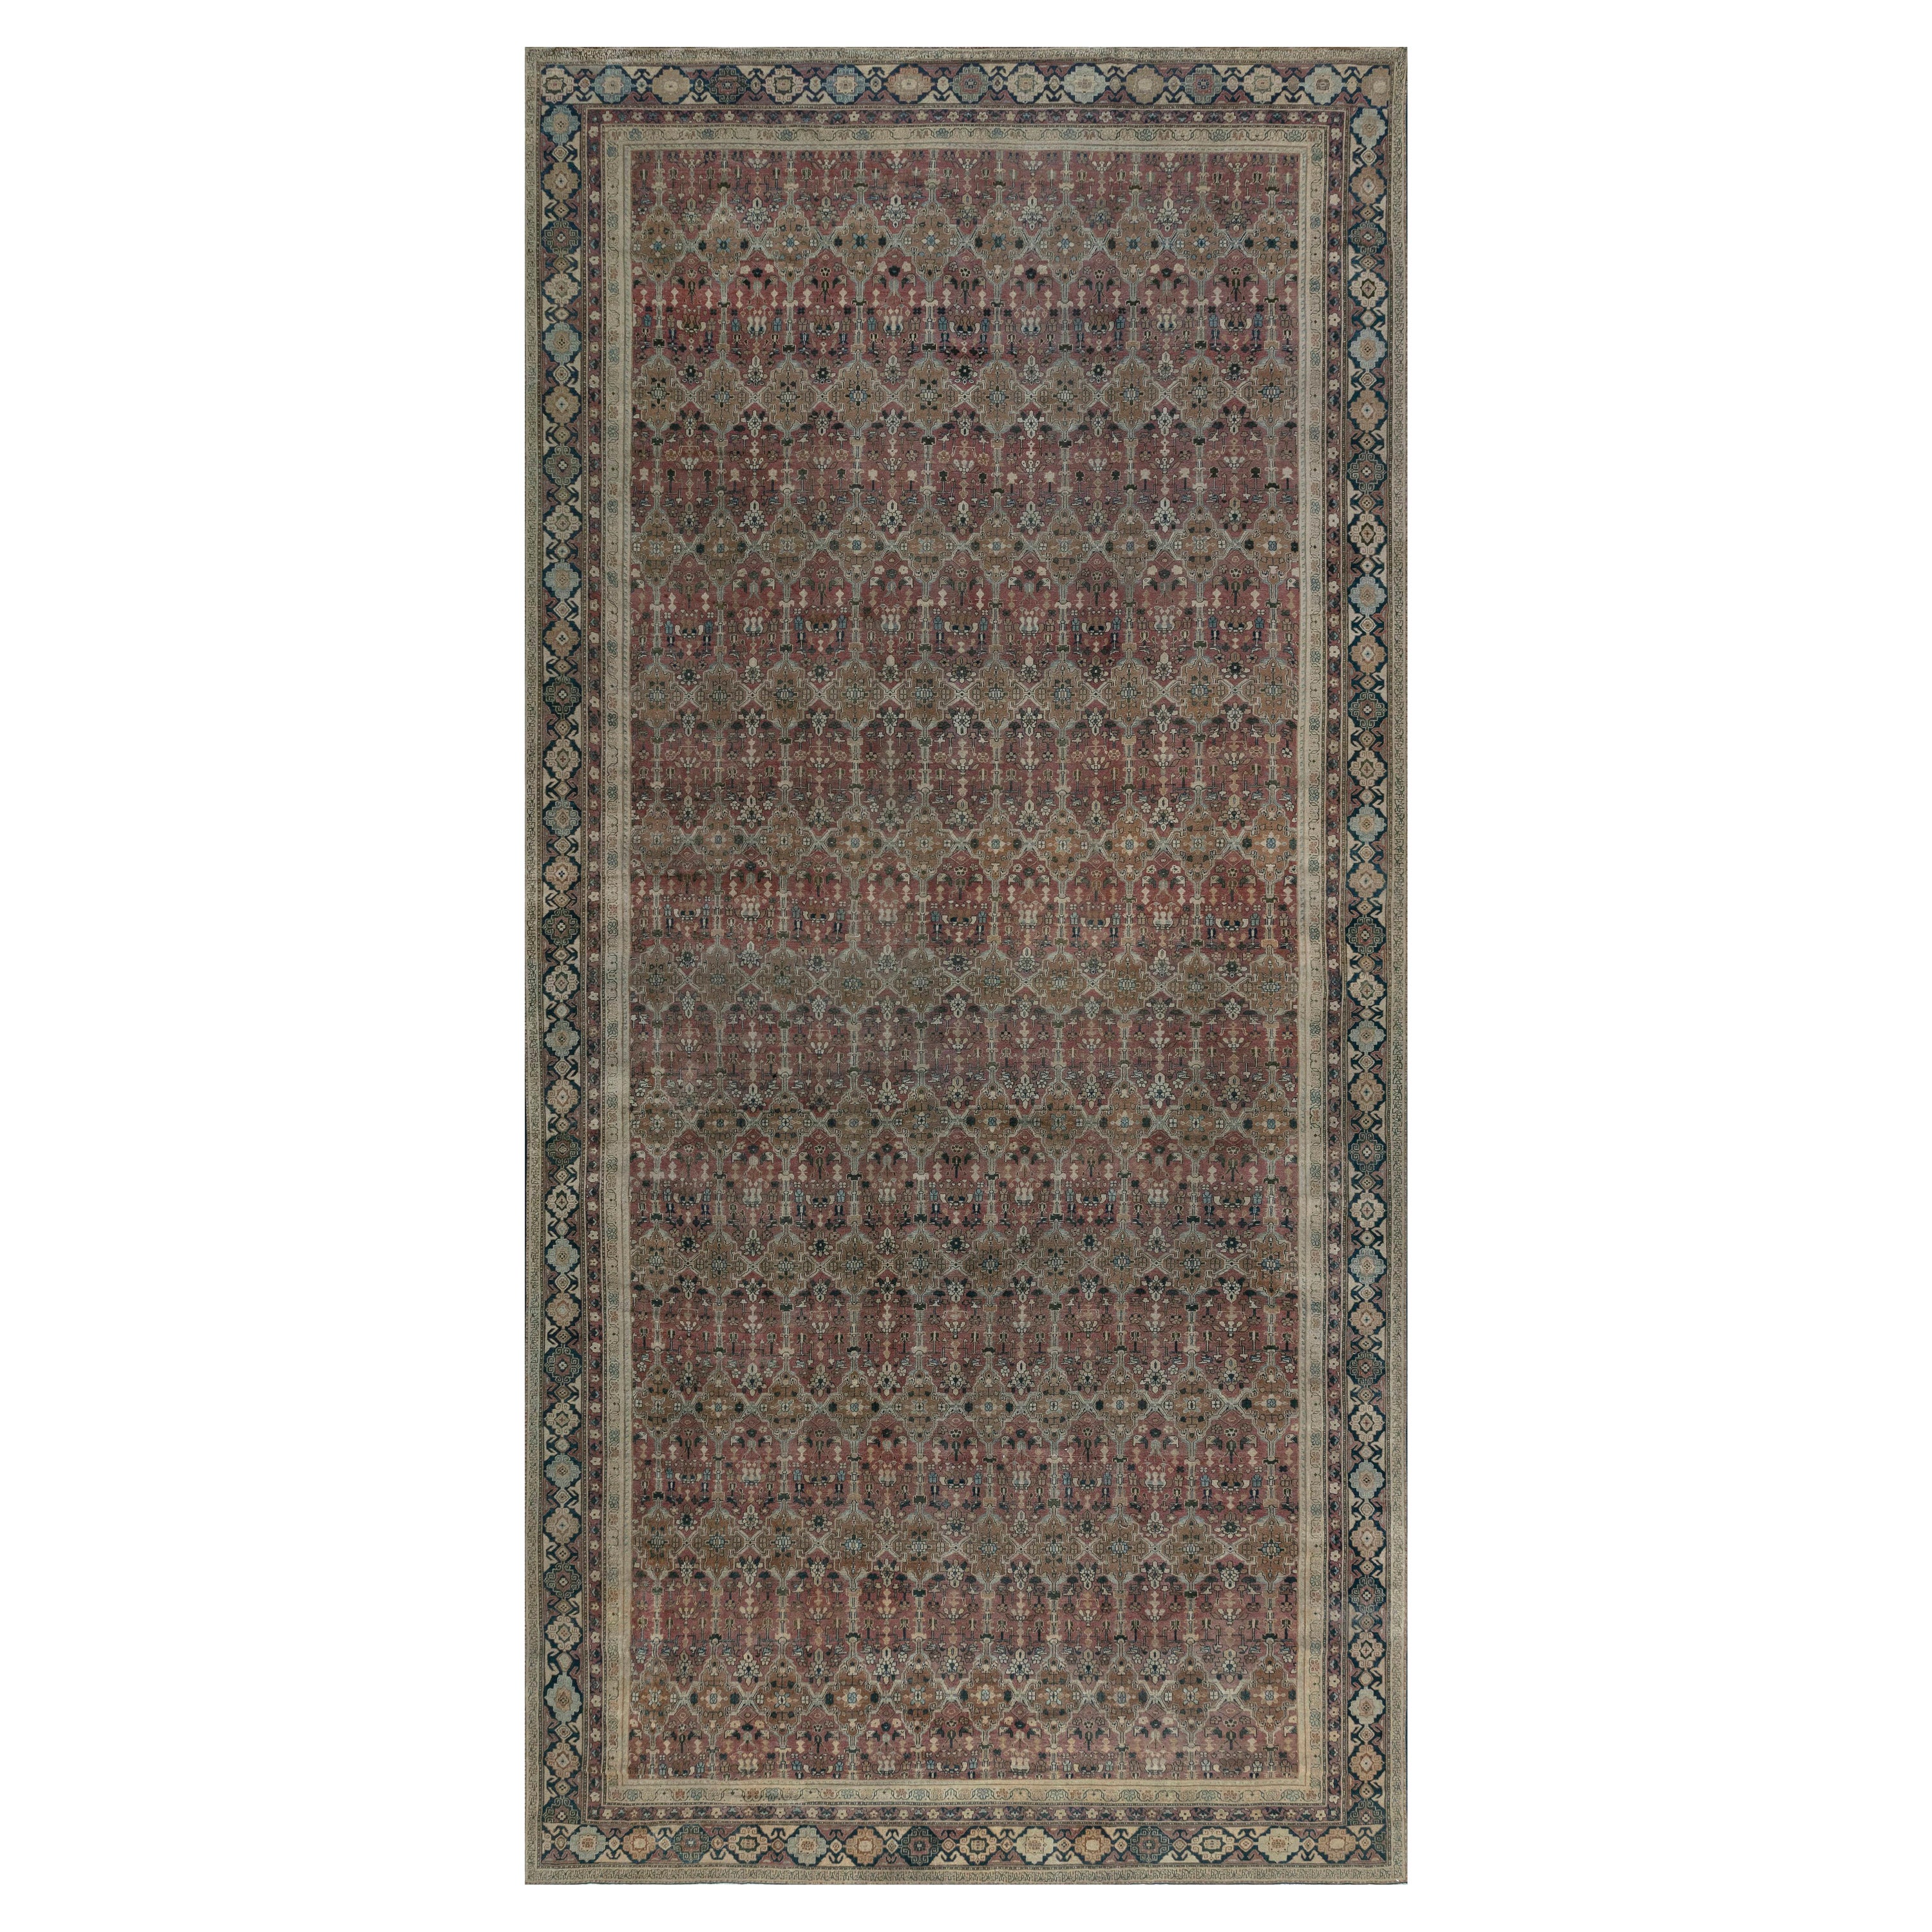 Antique Indian Handmade Carpet For Sale